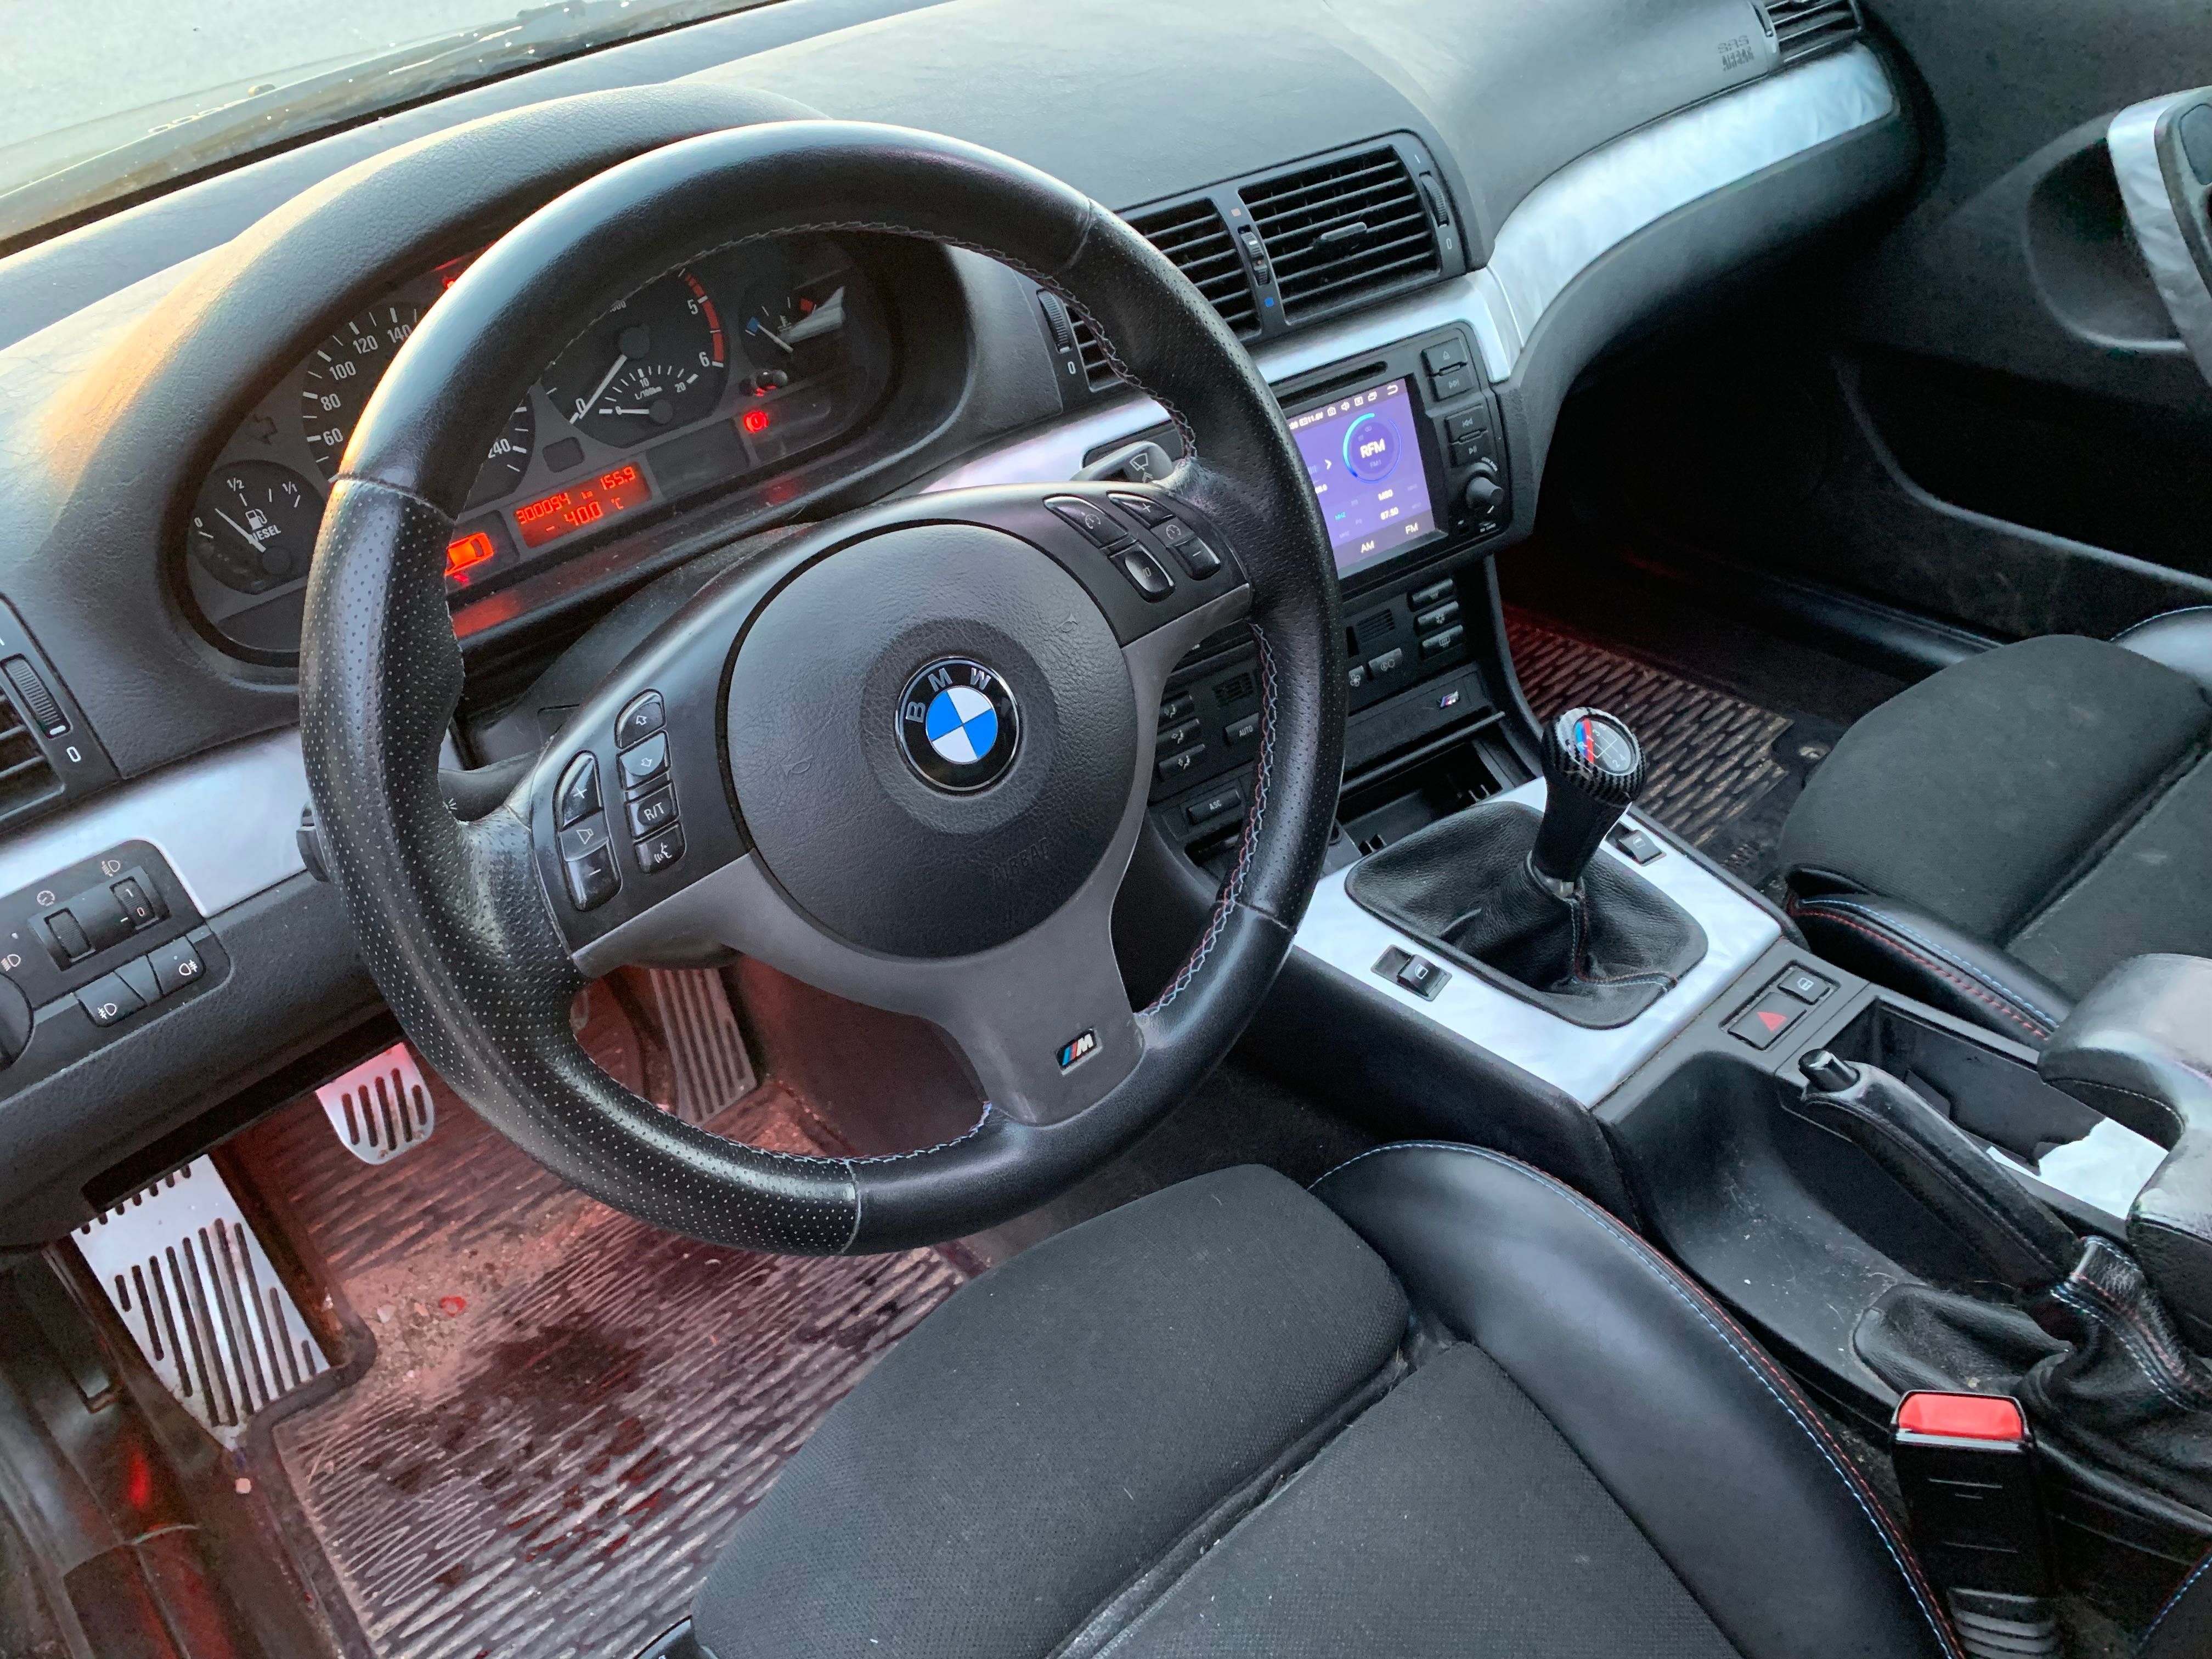 BMW e46 320d compact